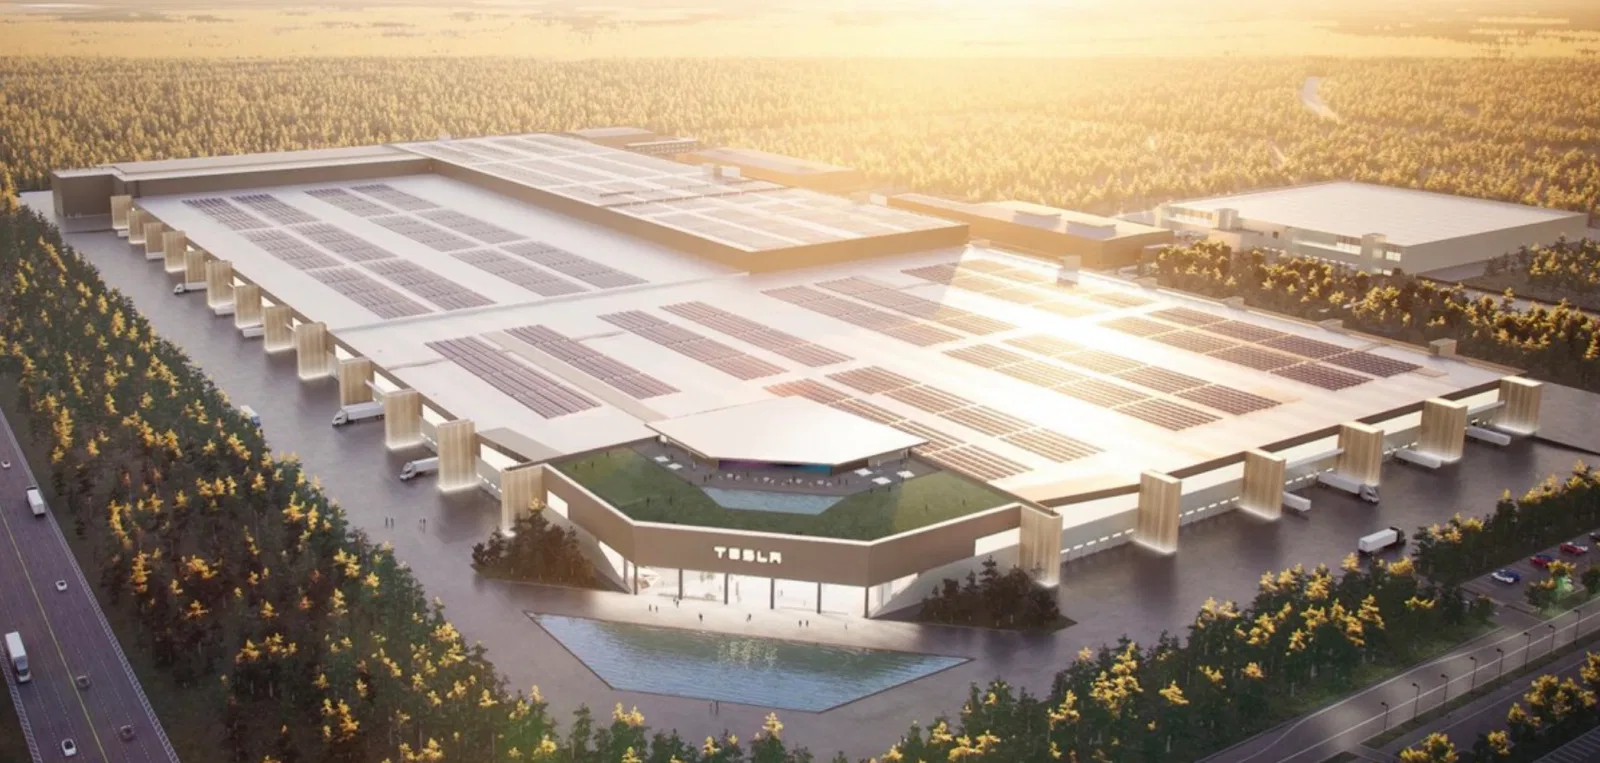 Tesla's New Berlin GigaFactory Will Look Like A High Tech Corporate Headquarters